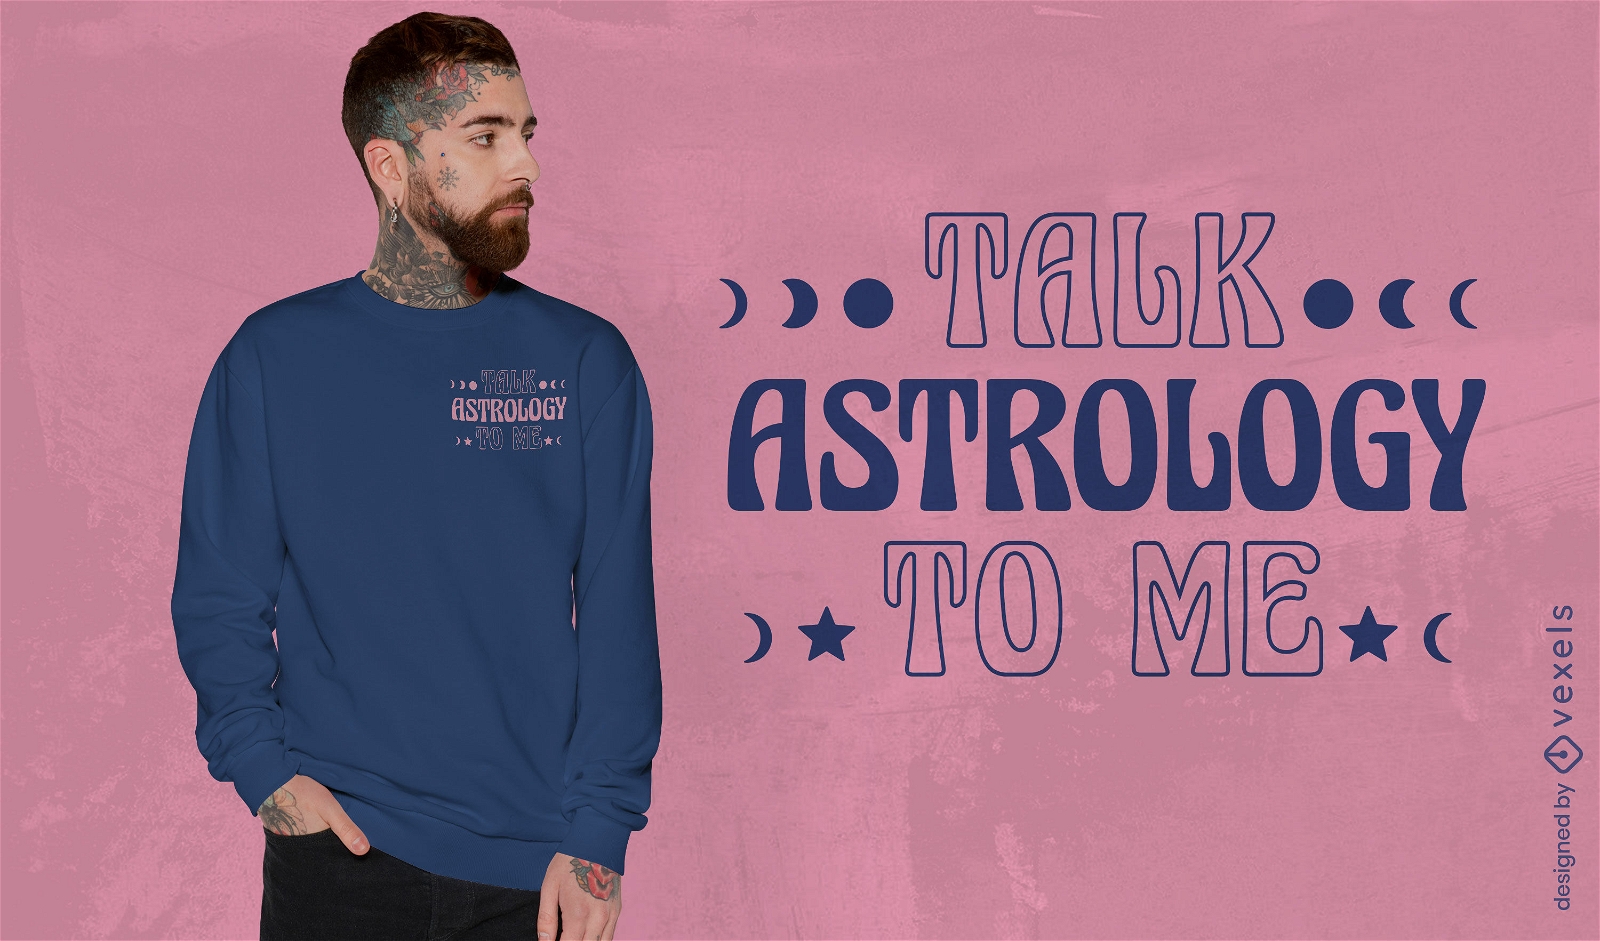 H?blame de astrolog?a dise?o de camiseta.